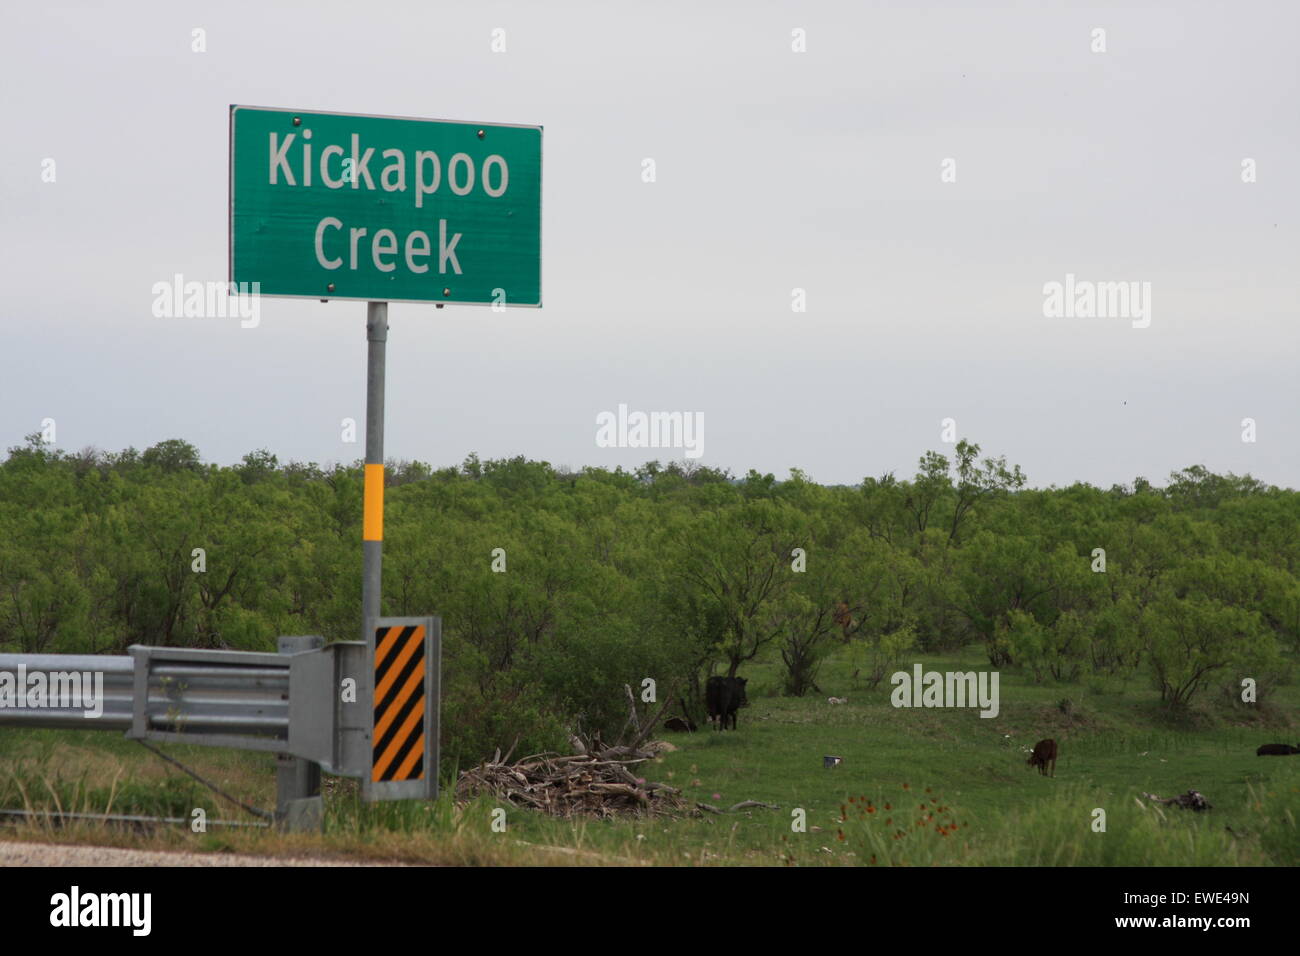 Kickapoo Creek Road sign in Texas USA Foto Stock